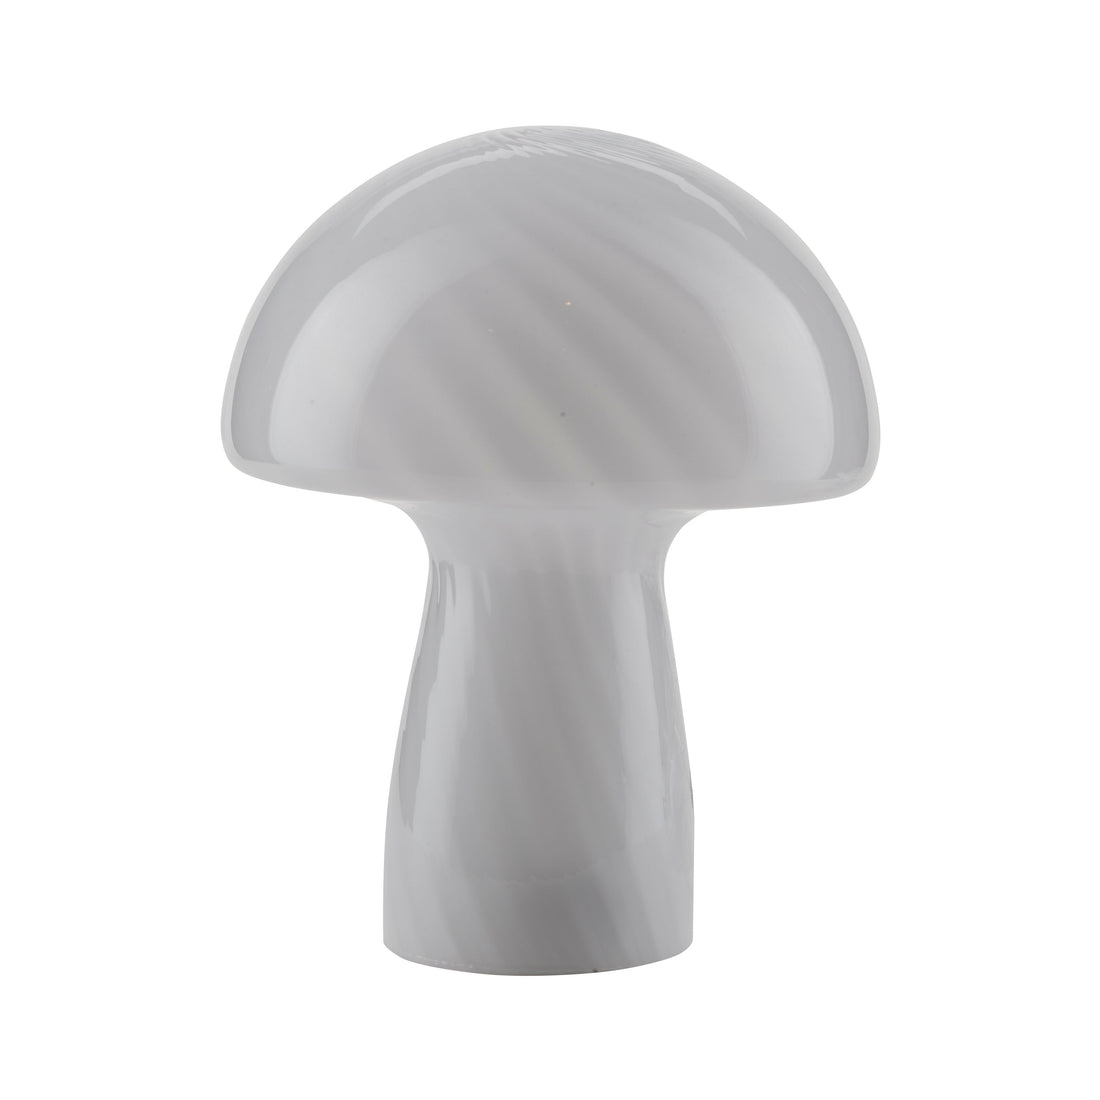 Bahne - Fungal lamp / Mushroom Table lamp, white - H23 cm.